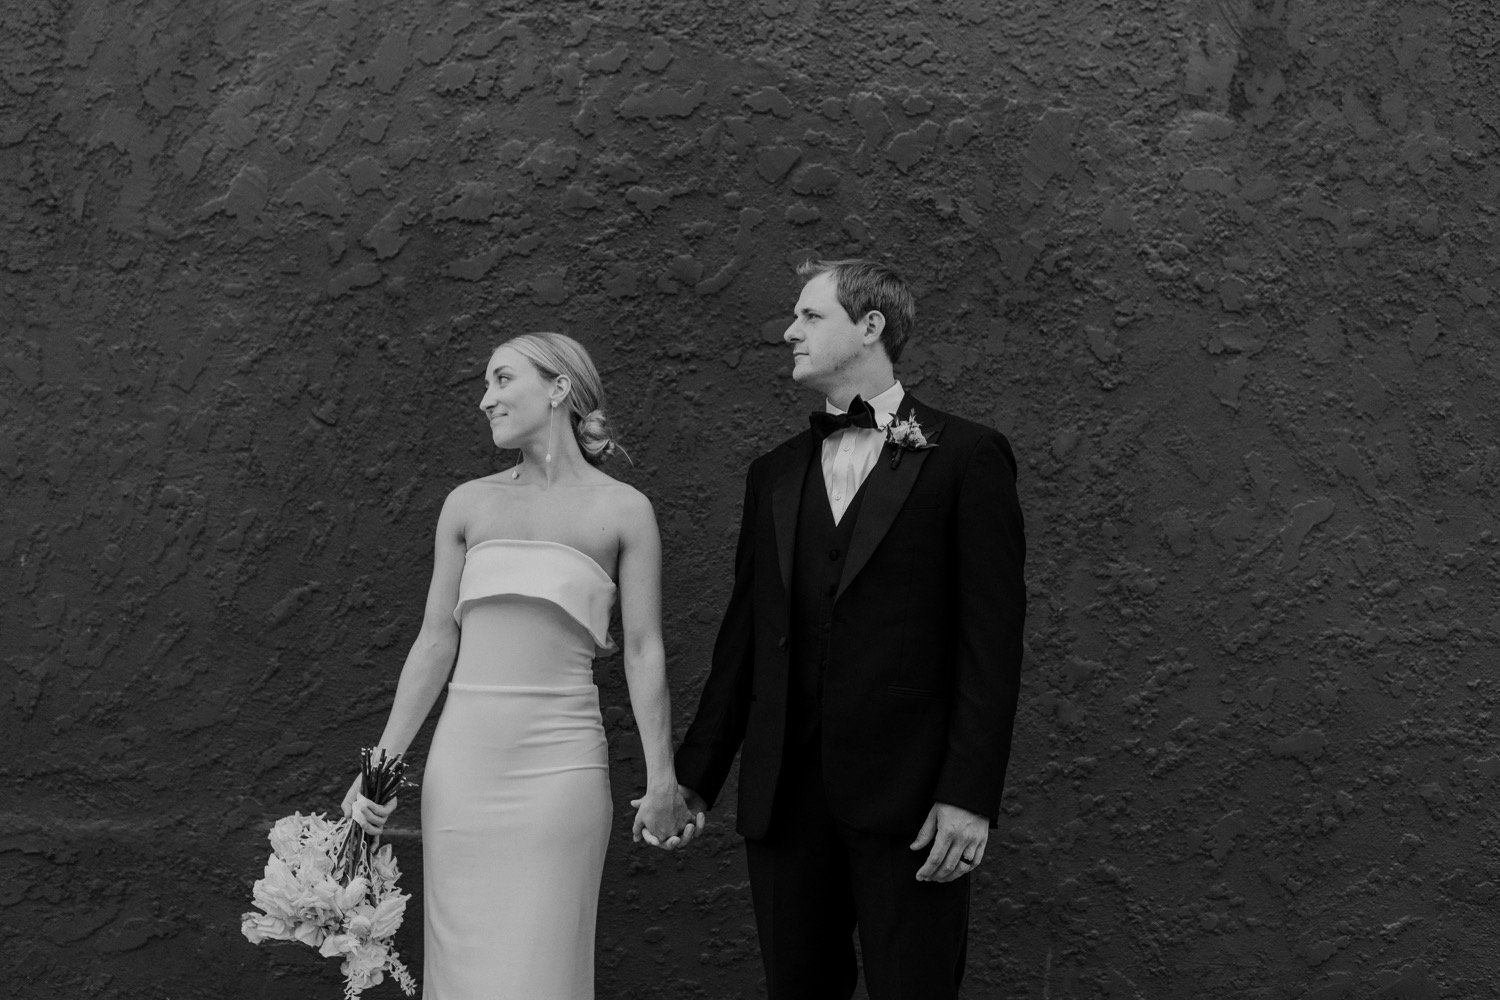 58_Reinholz-847-2_Kansas-City-Wedding-Photography-Kelsey-Diane-The-Everly-Event-Space-Photographer-Missouri%0A.jpg